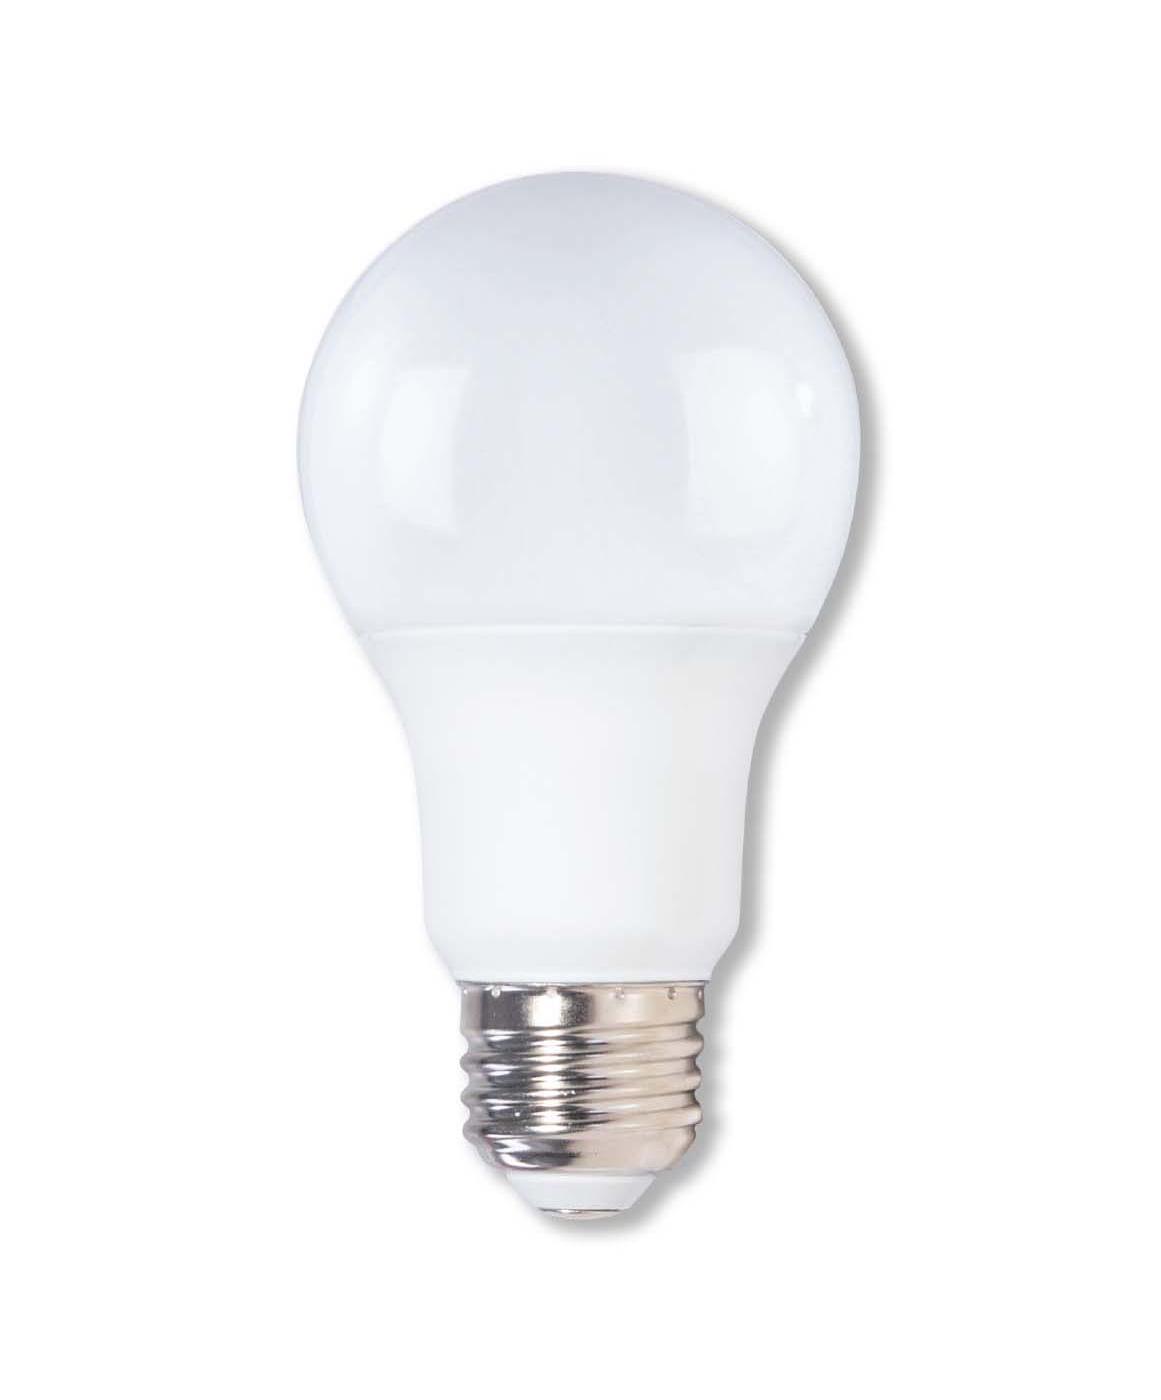 H-E-B Double Life A19 100-Watt LED Light Bulbs - Soft White; image 2 of 2